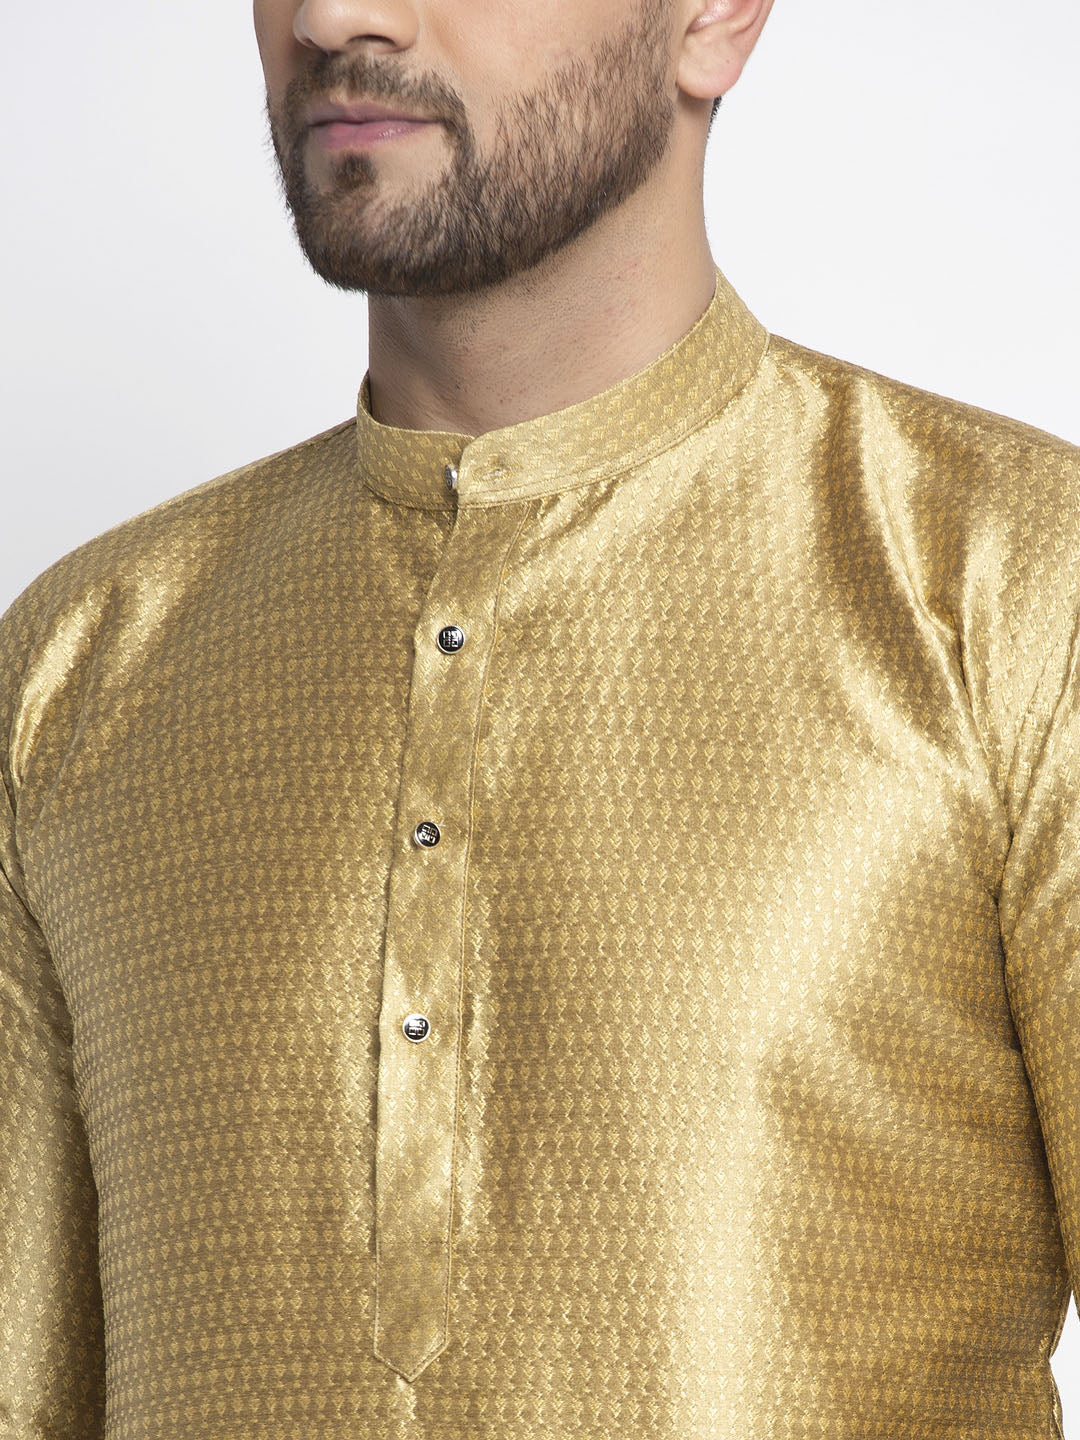 Men's Mustard & White Woven Design Kurta with Pyjamas ( JOKP 637 Mustard ) - Virat Fashions